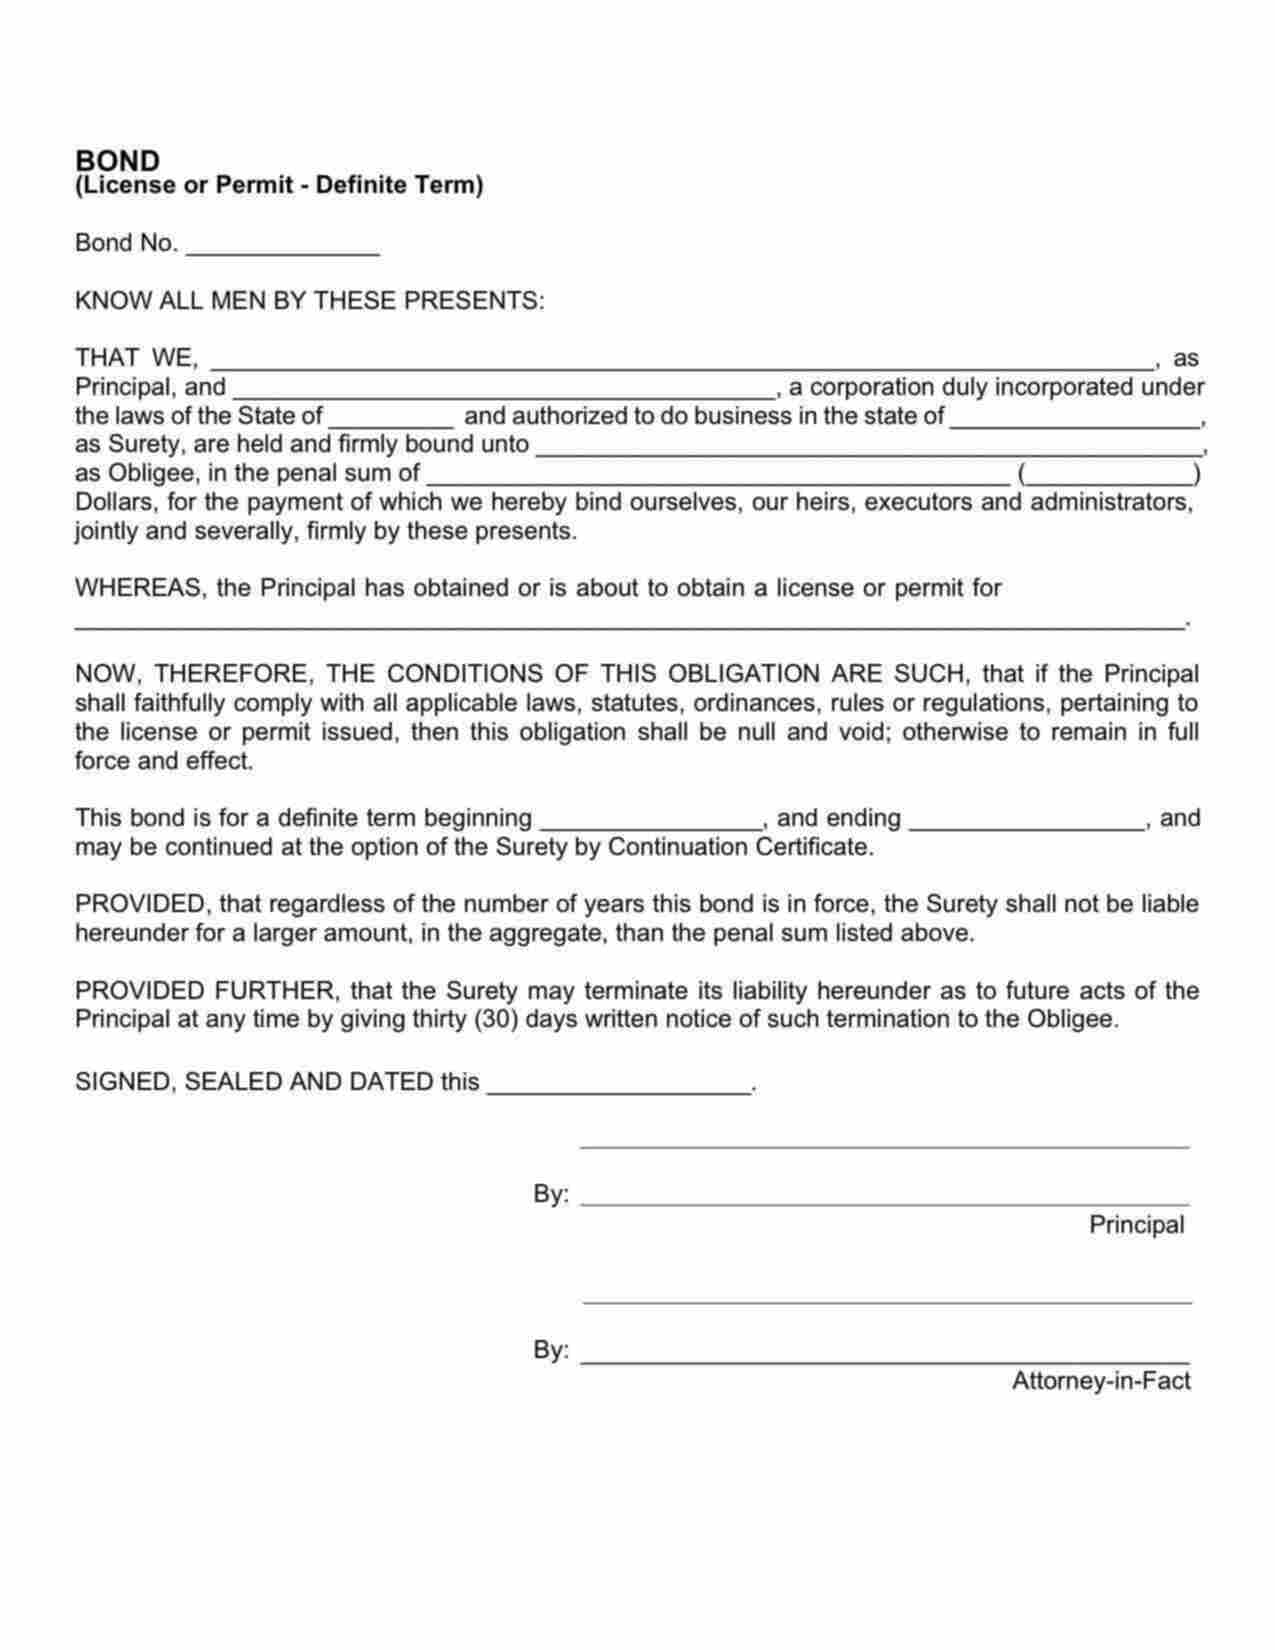 Kansas License/Permit Bond Form